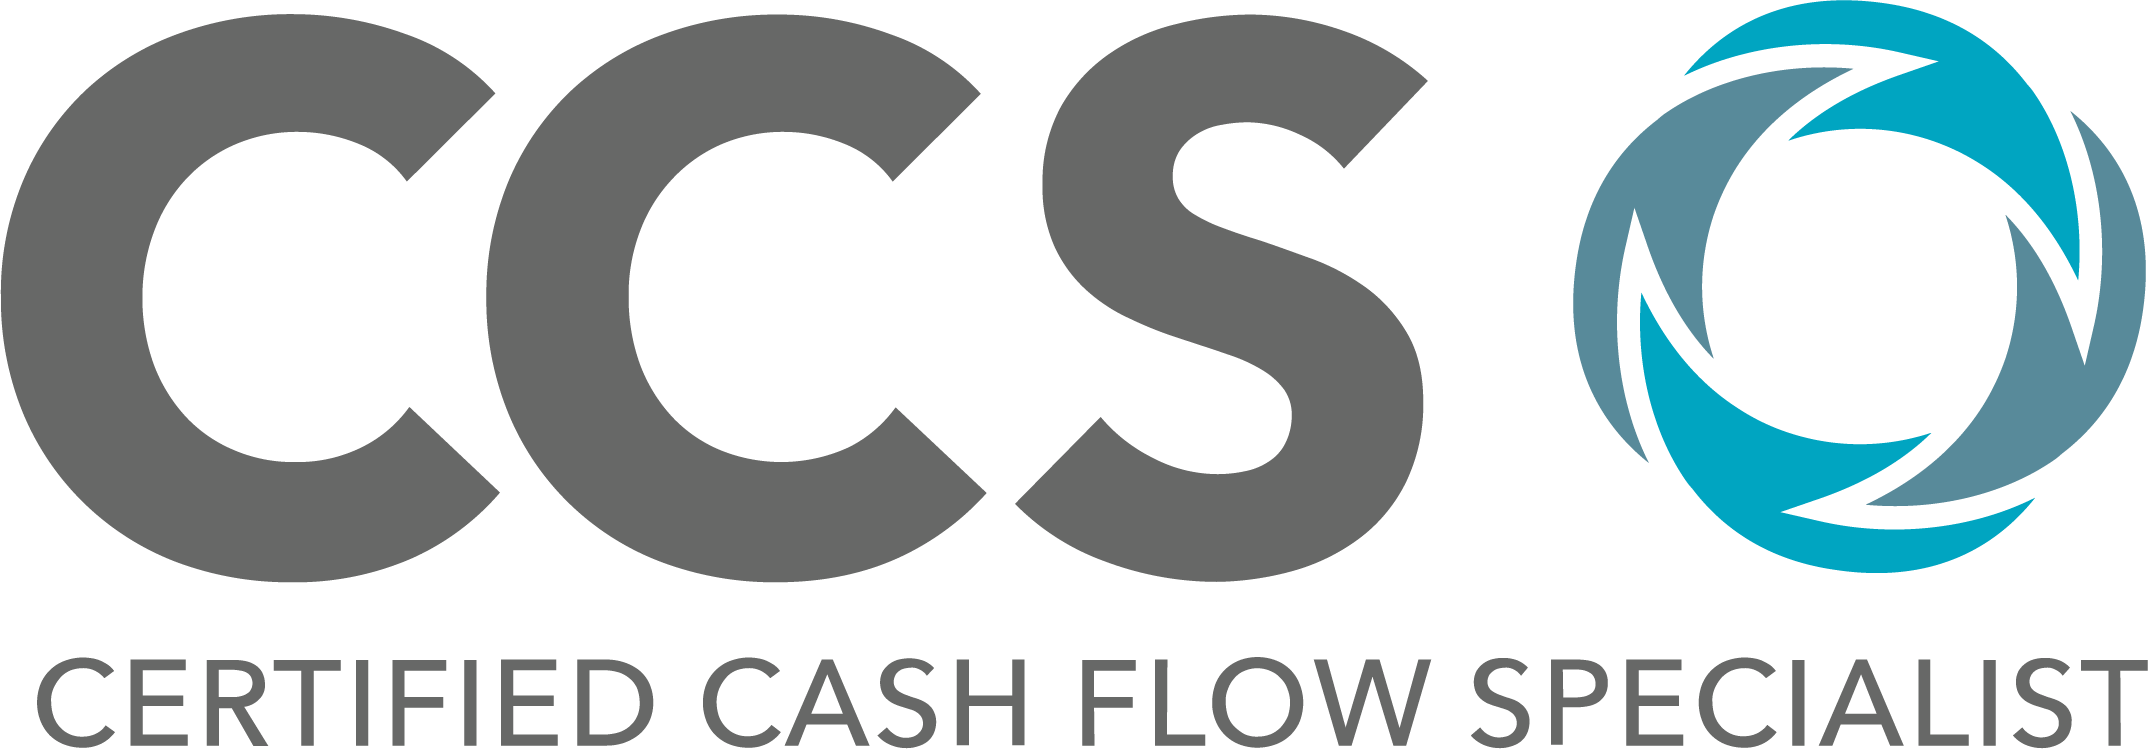 Certified Cash Flow Specialists™